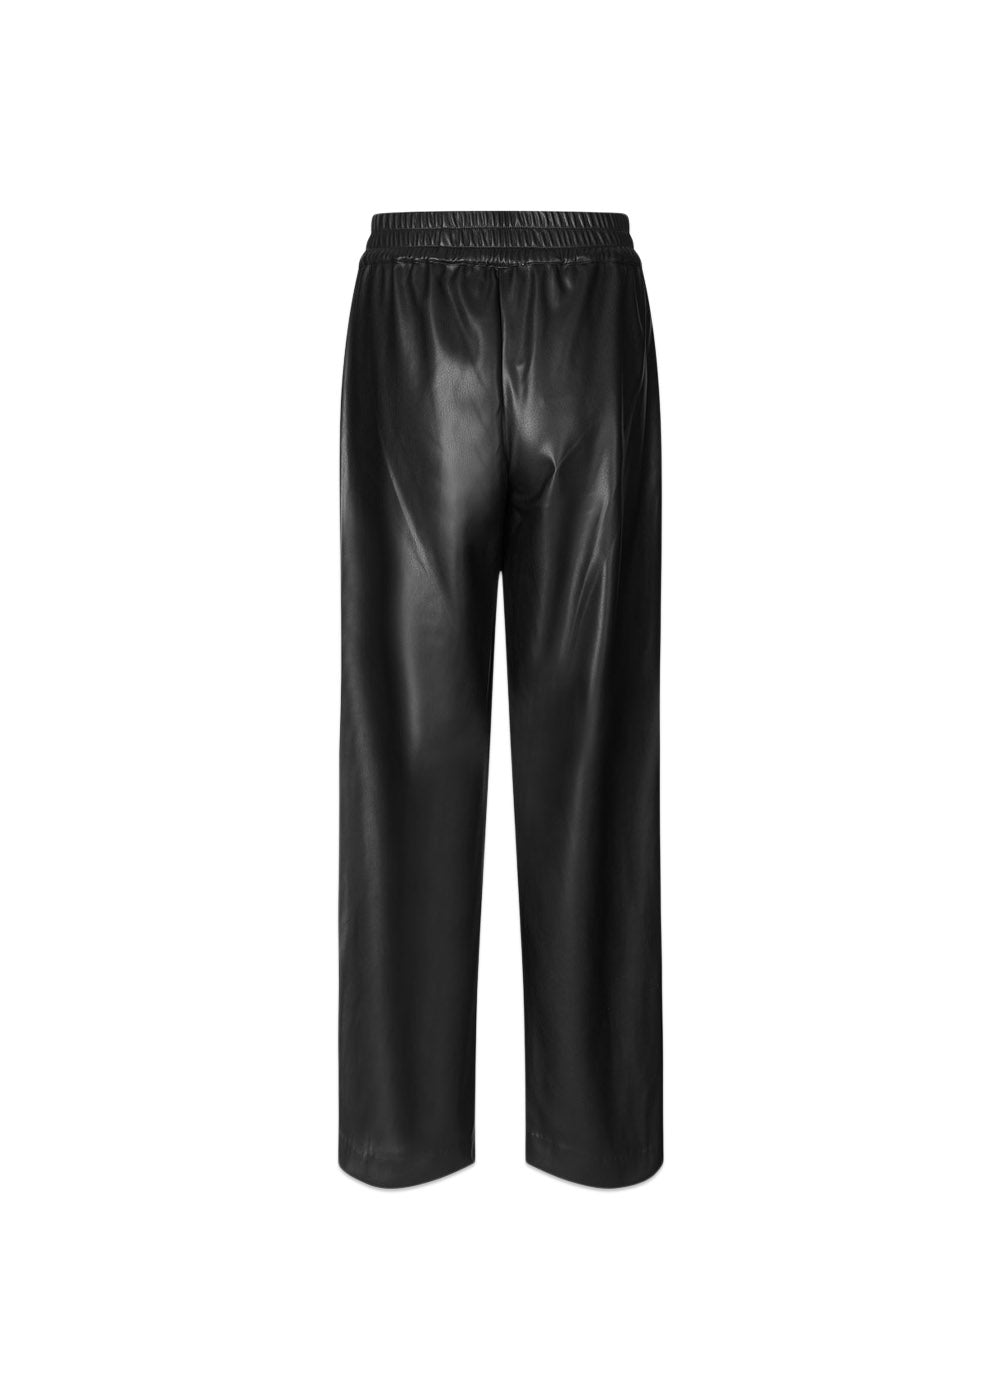 FaminaMD pants - Black